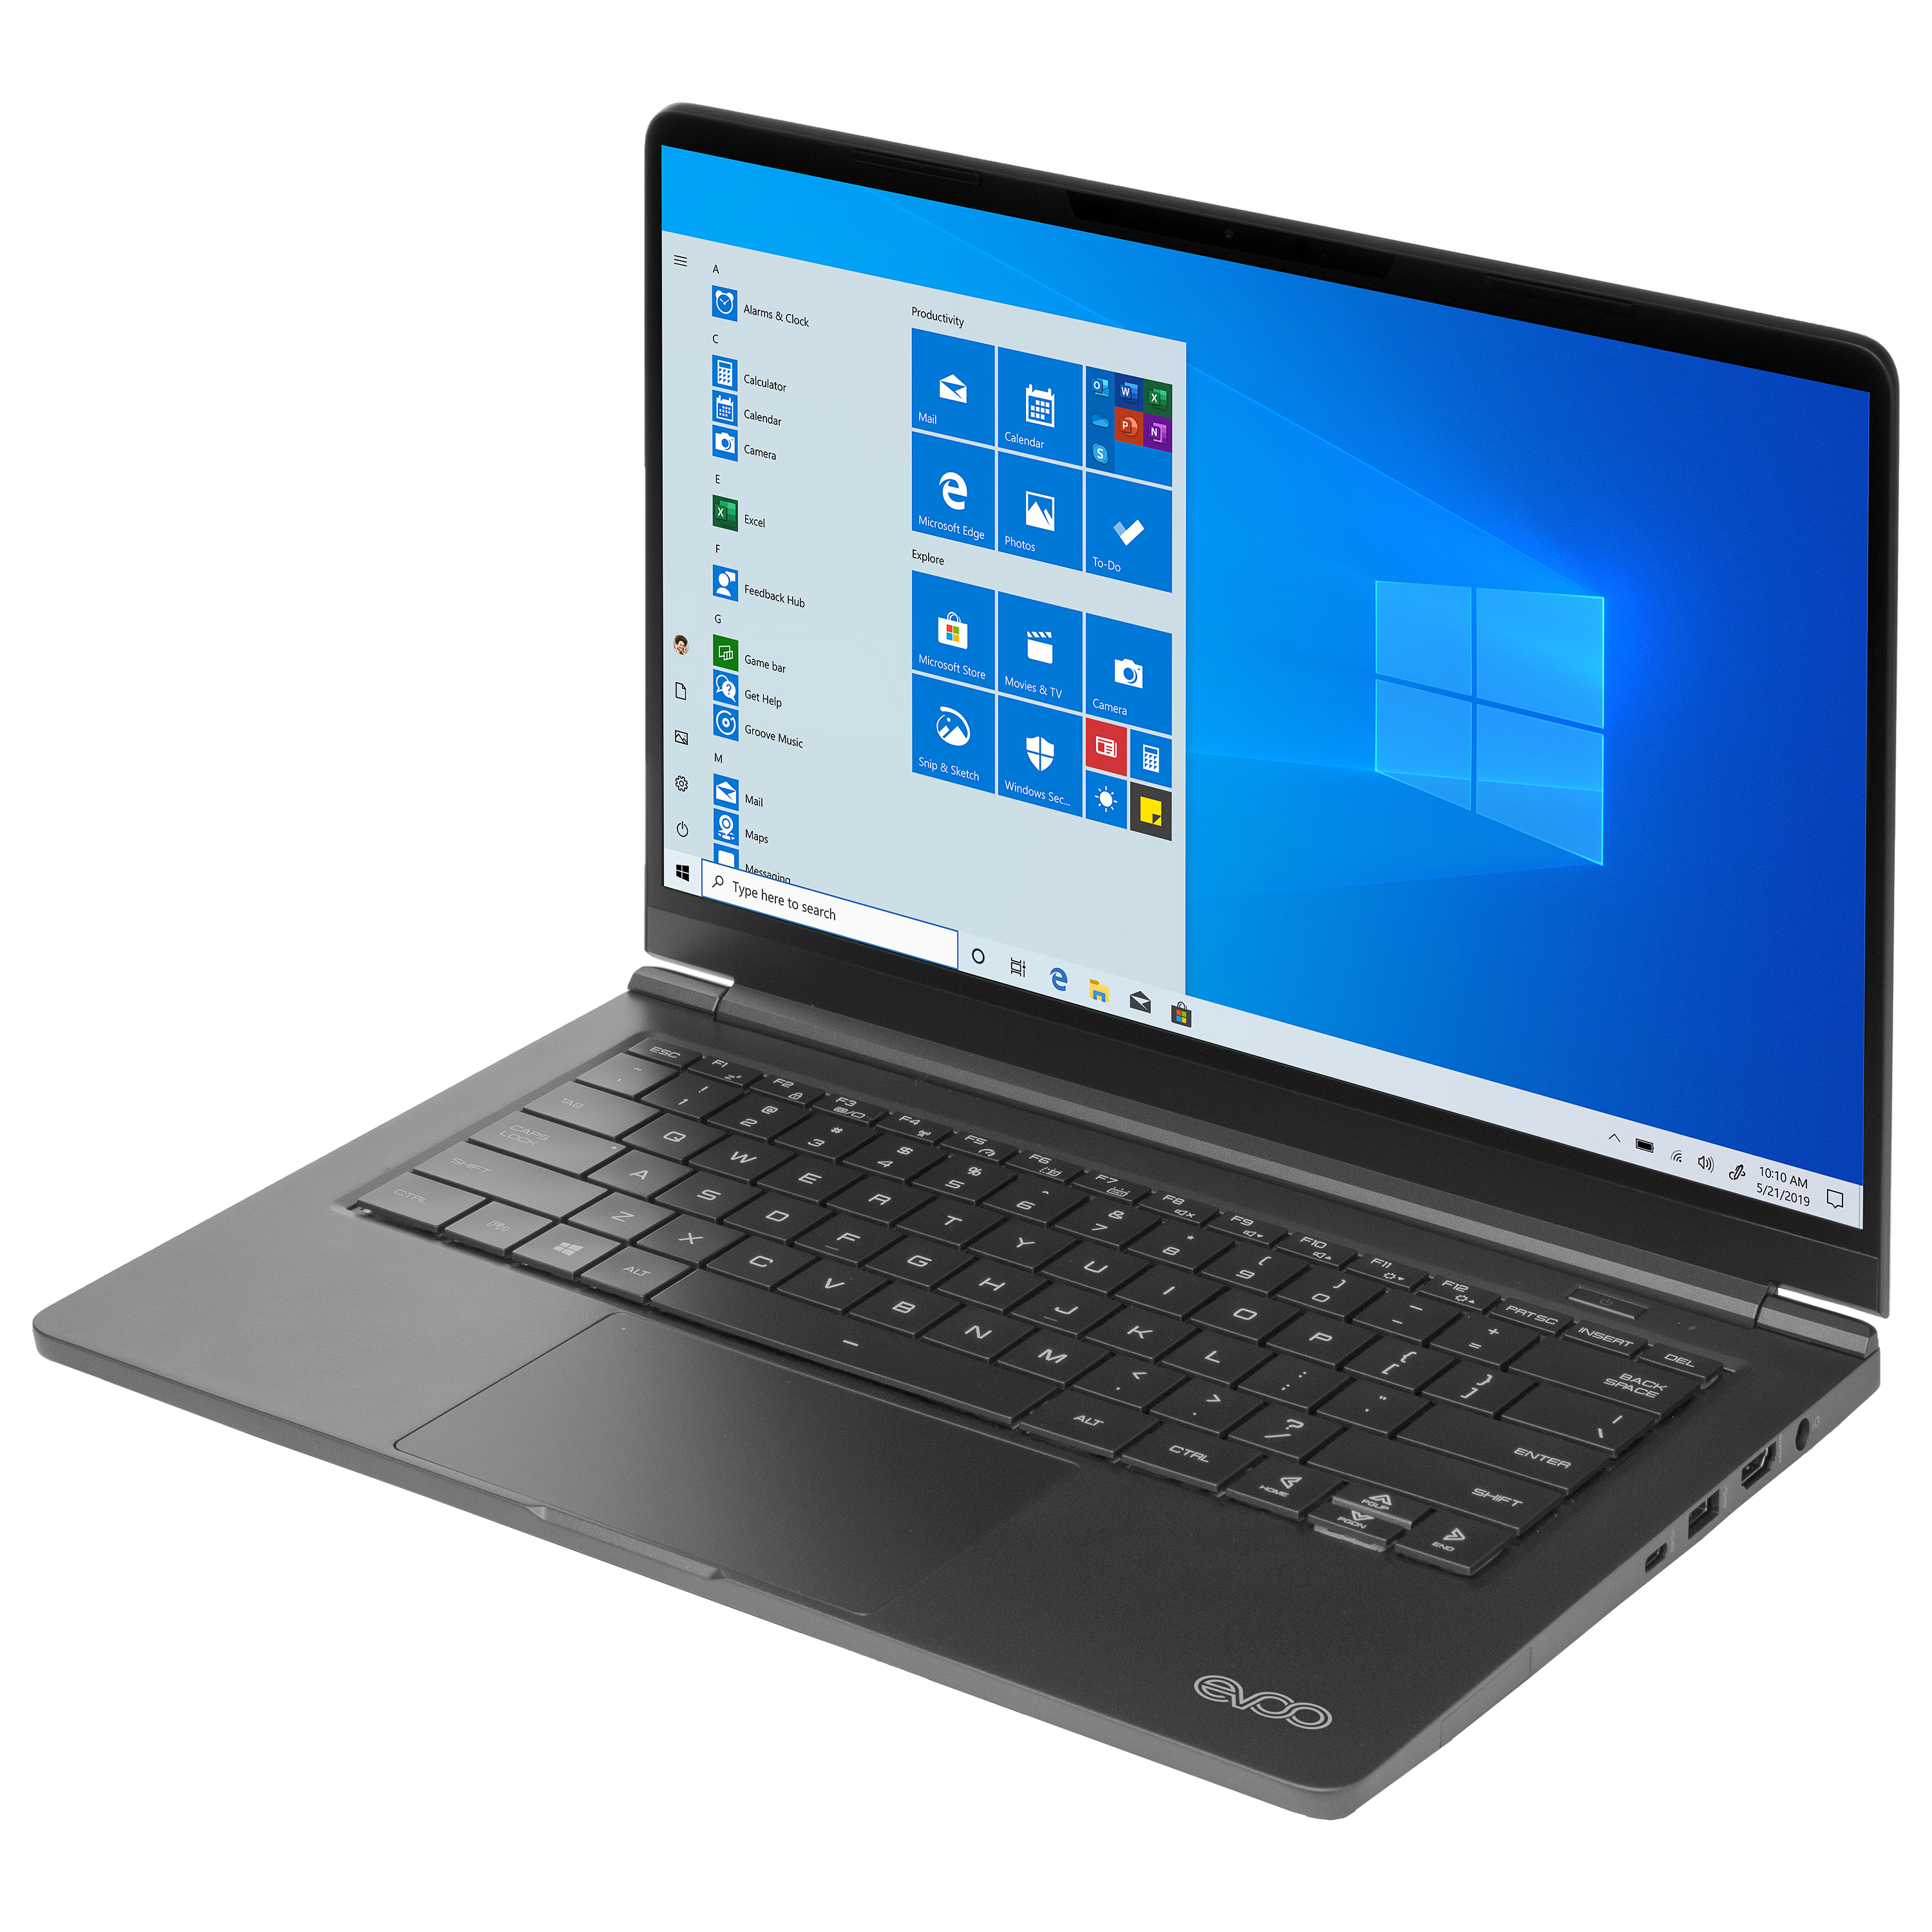 EVOO 14.1” Ultra Slim Notebook - Elite Series, FHD Display, AMD Ryzen 5 3500U Processor with Radeon Vega 8 Graphics, 8GB RAM, 256GB SSD, HD Webcam, Windows 10 Home, Black - image 3 of 9